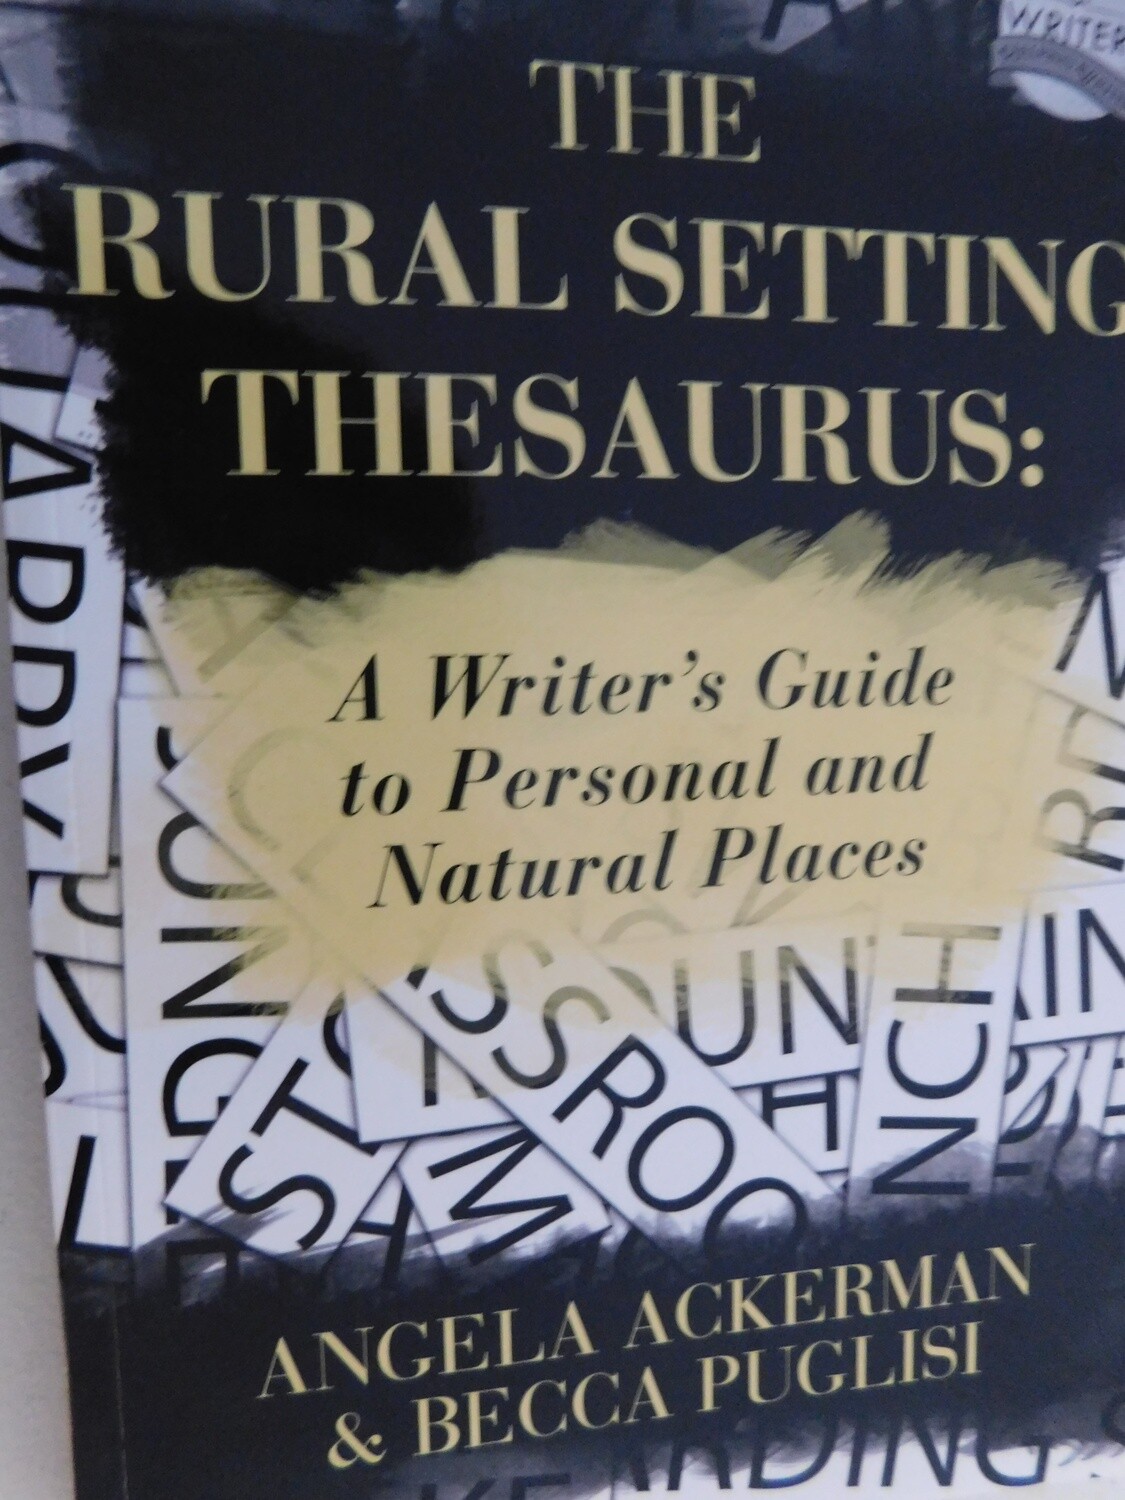 The Rural Setting Thesaurus